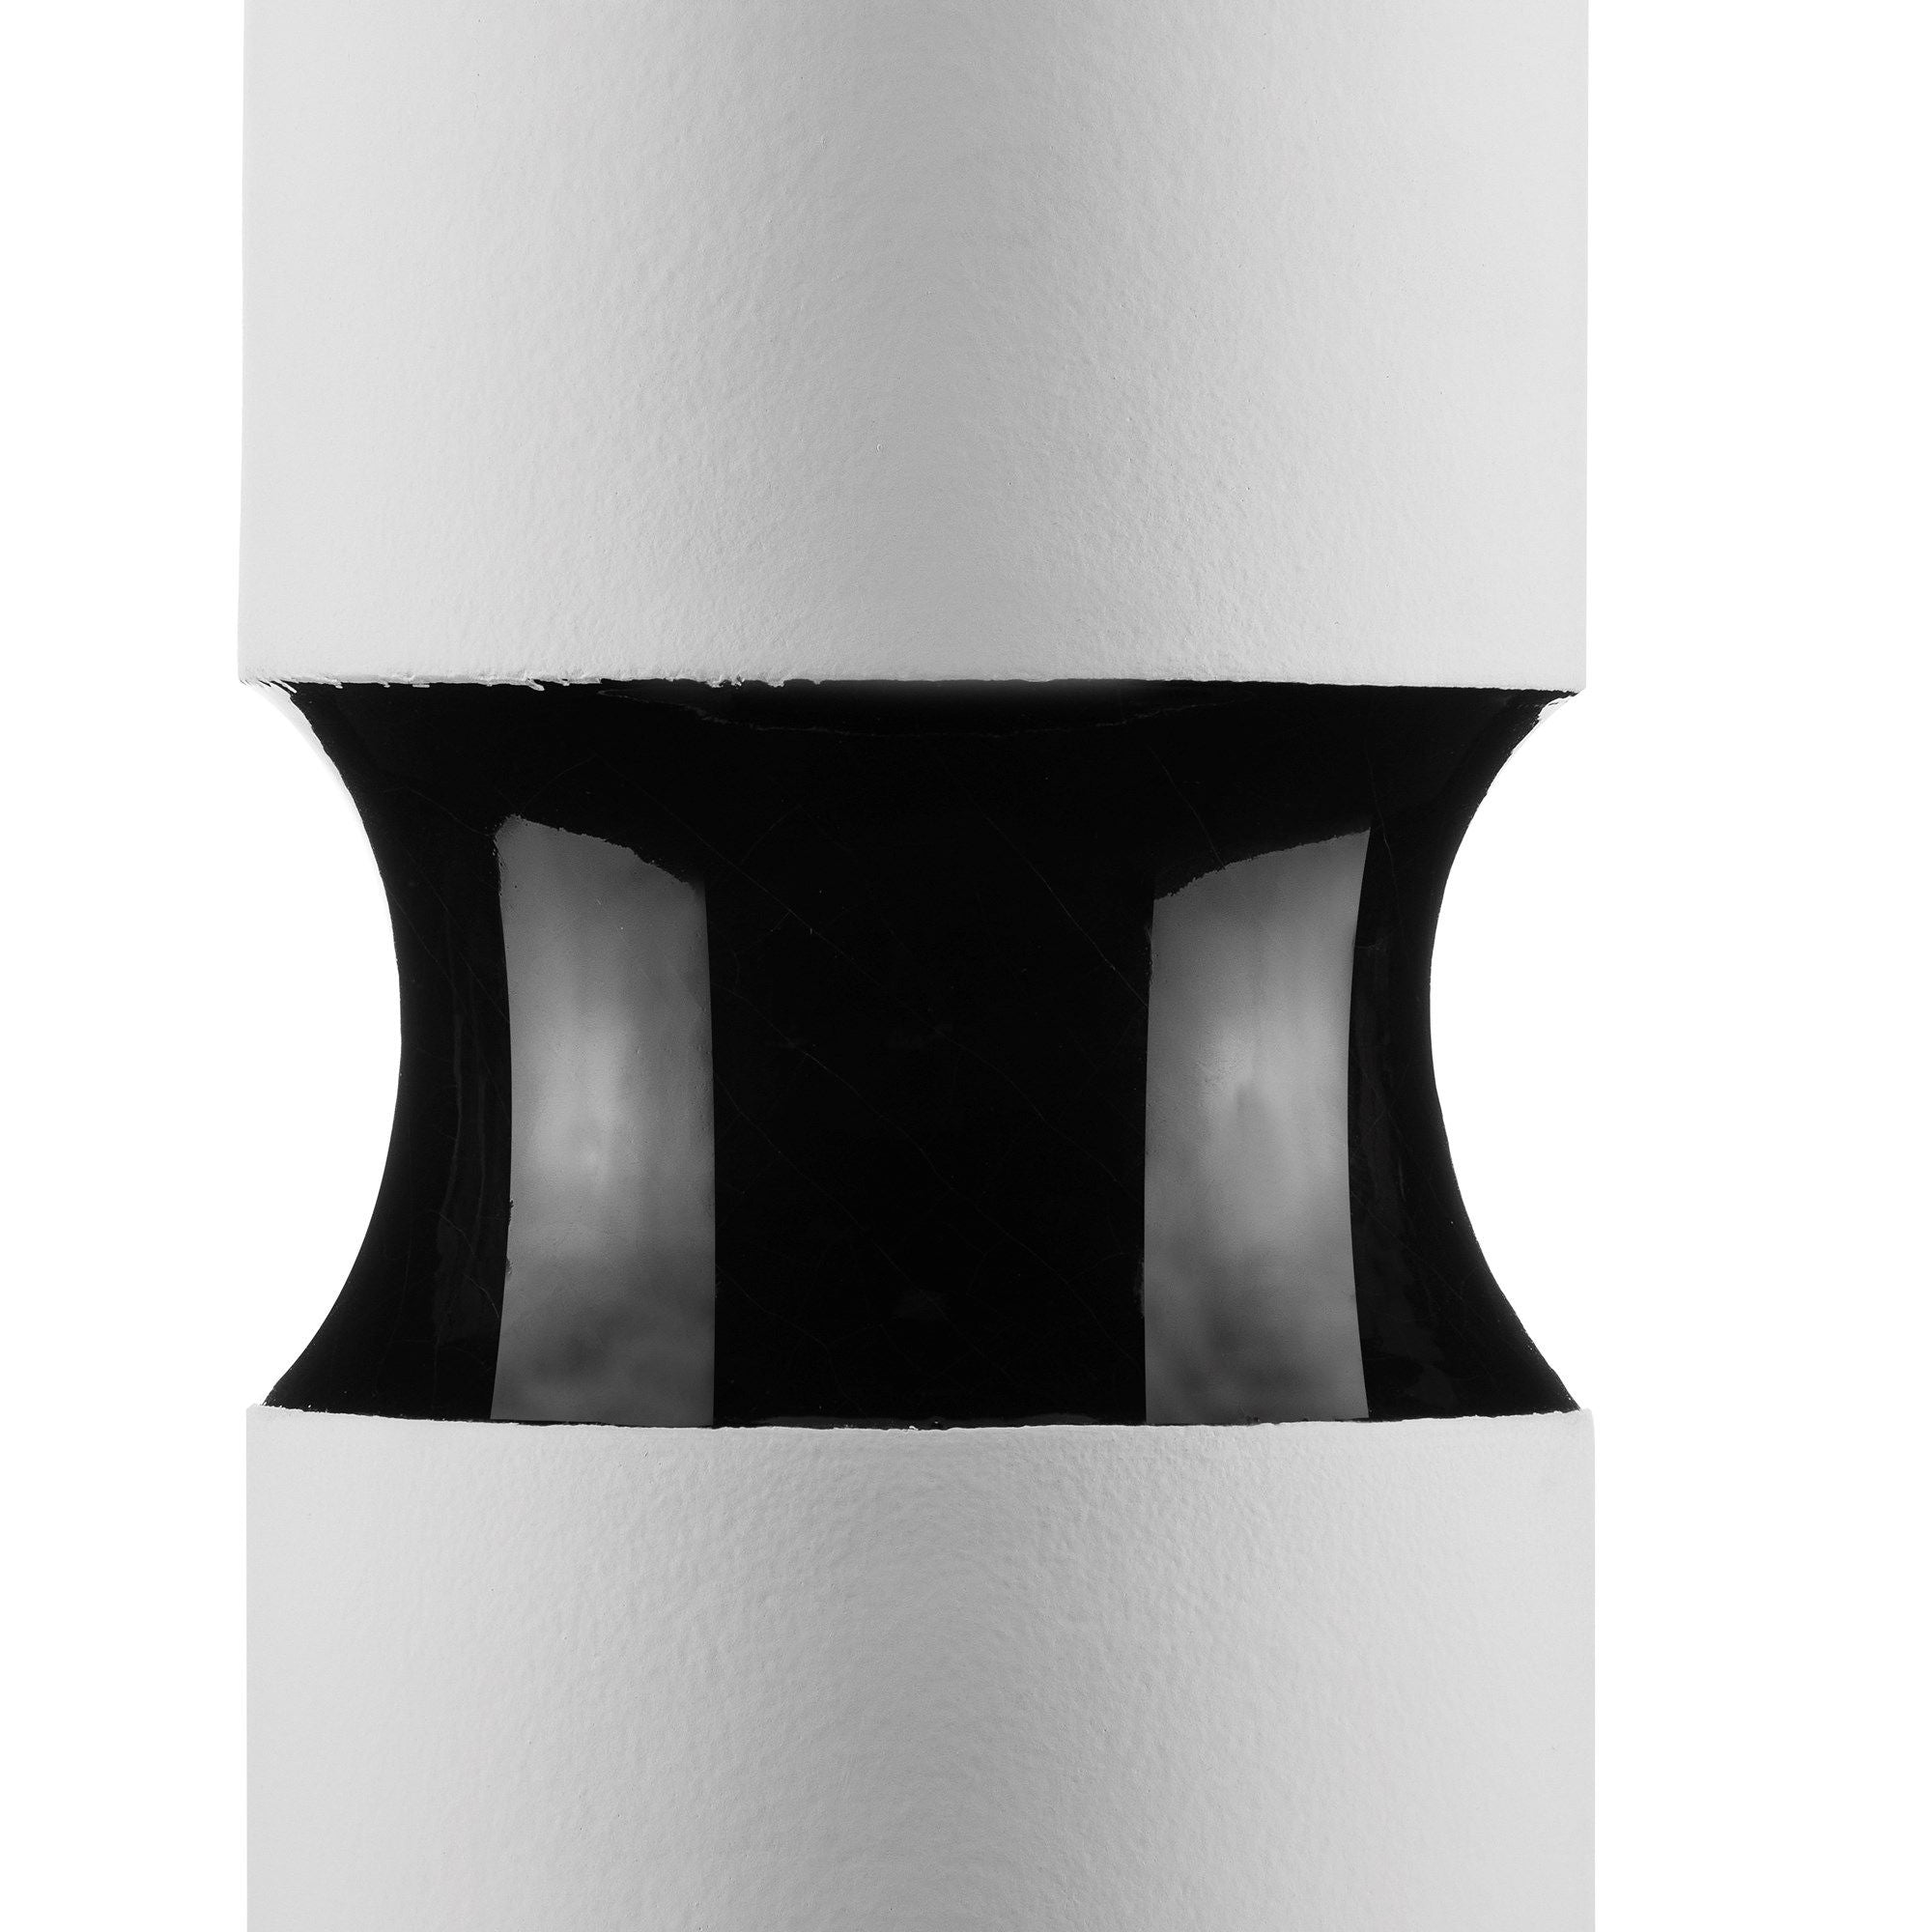 Althea Black & White Table Lamp - Off White/Black